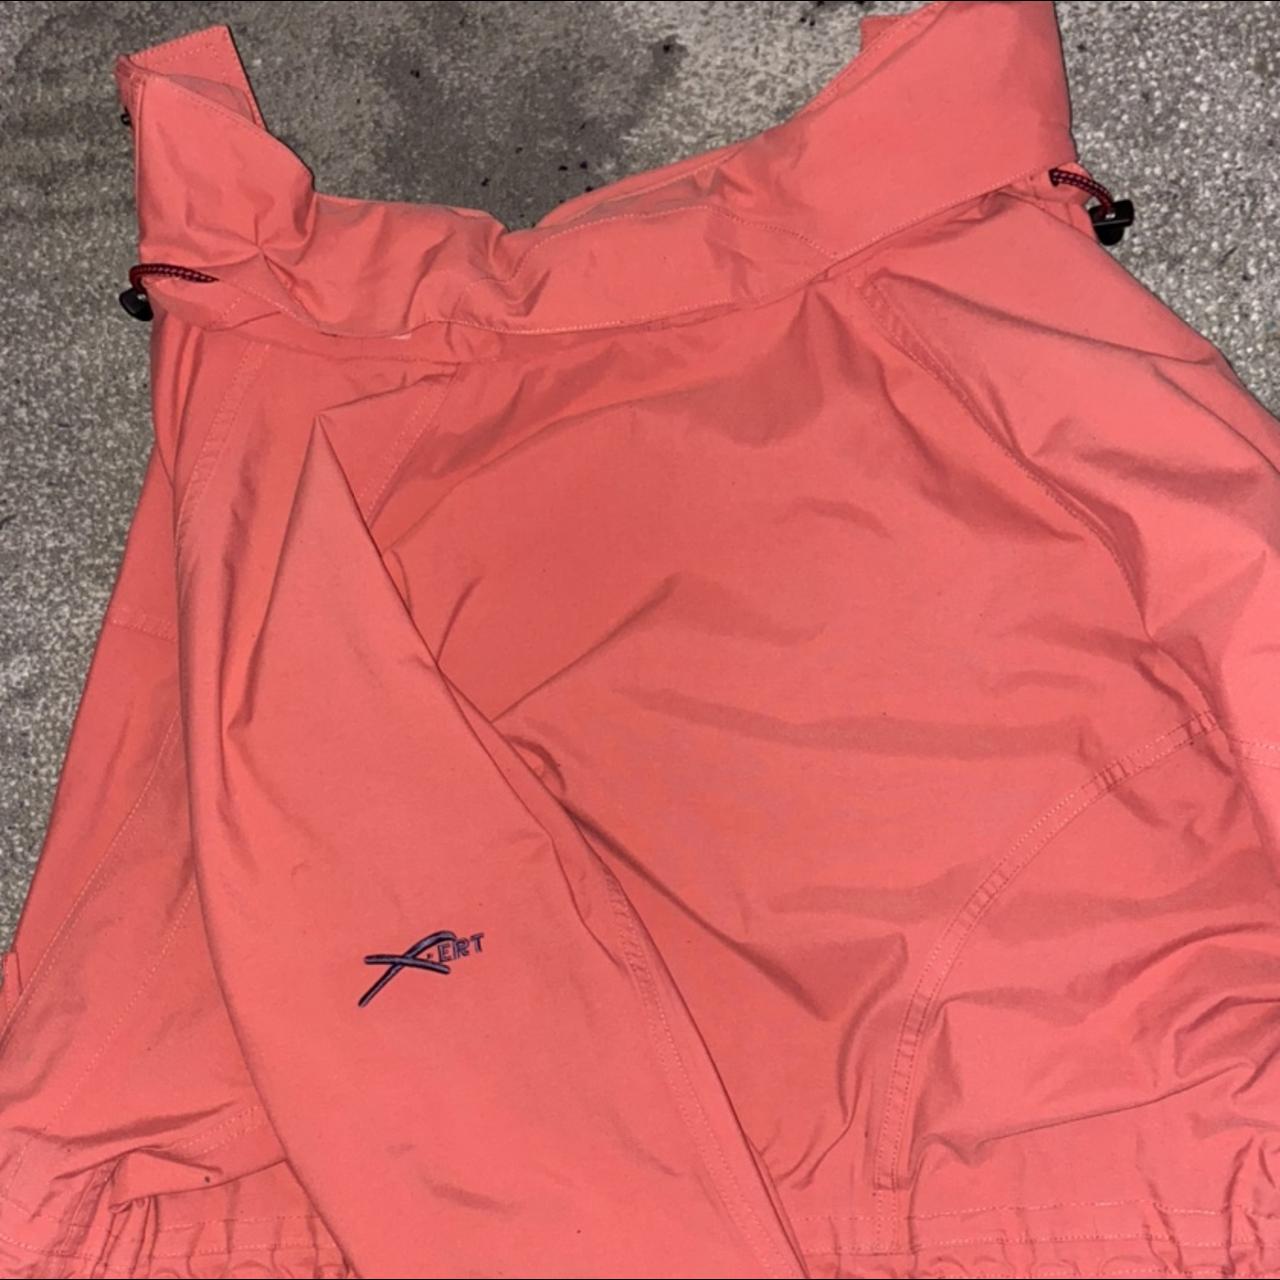 Product Image 4 - Peach-Salmon Regatta Jacket.
Double Zip Up